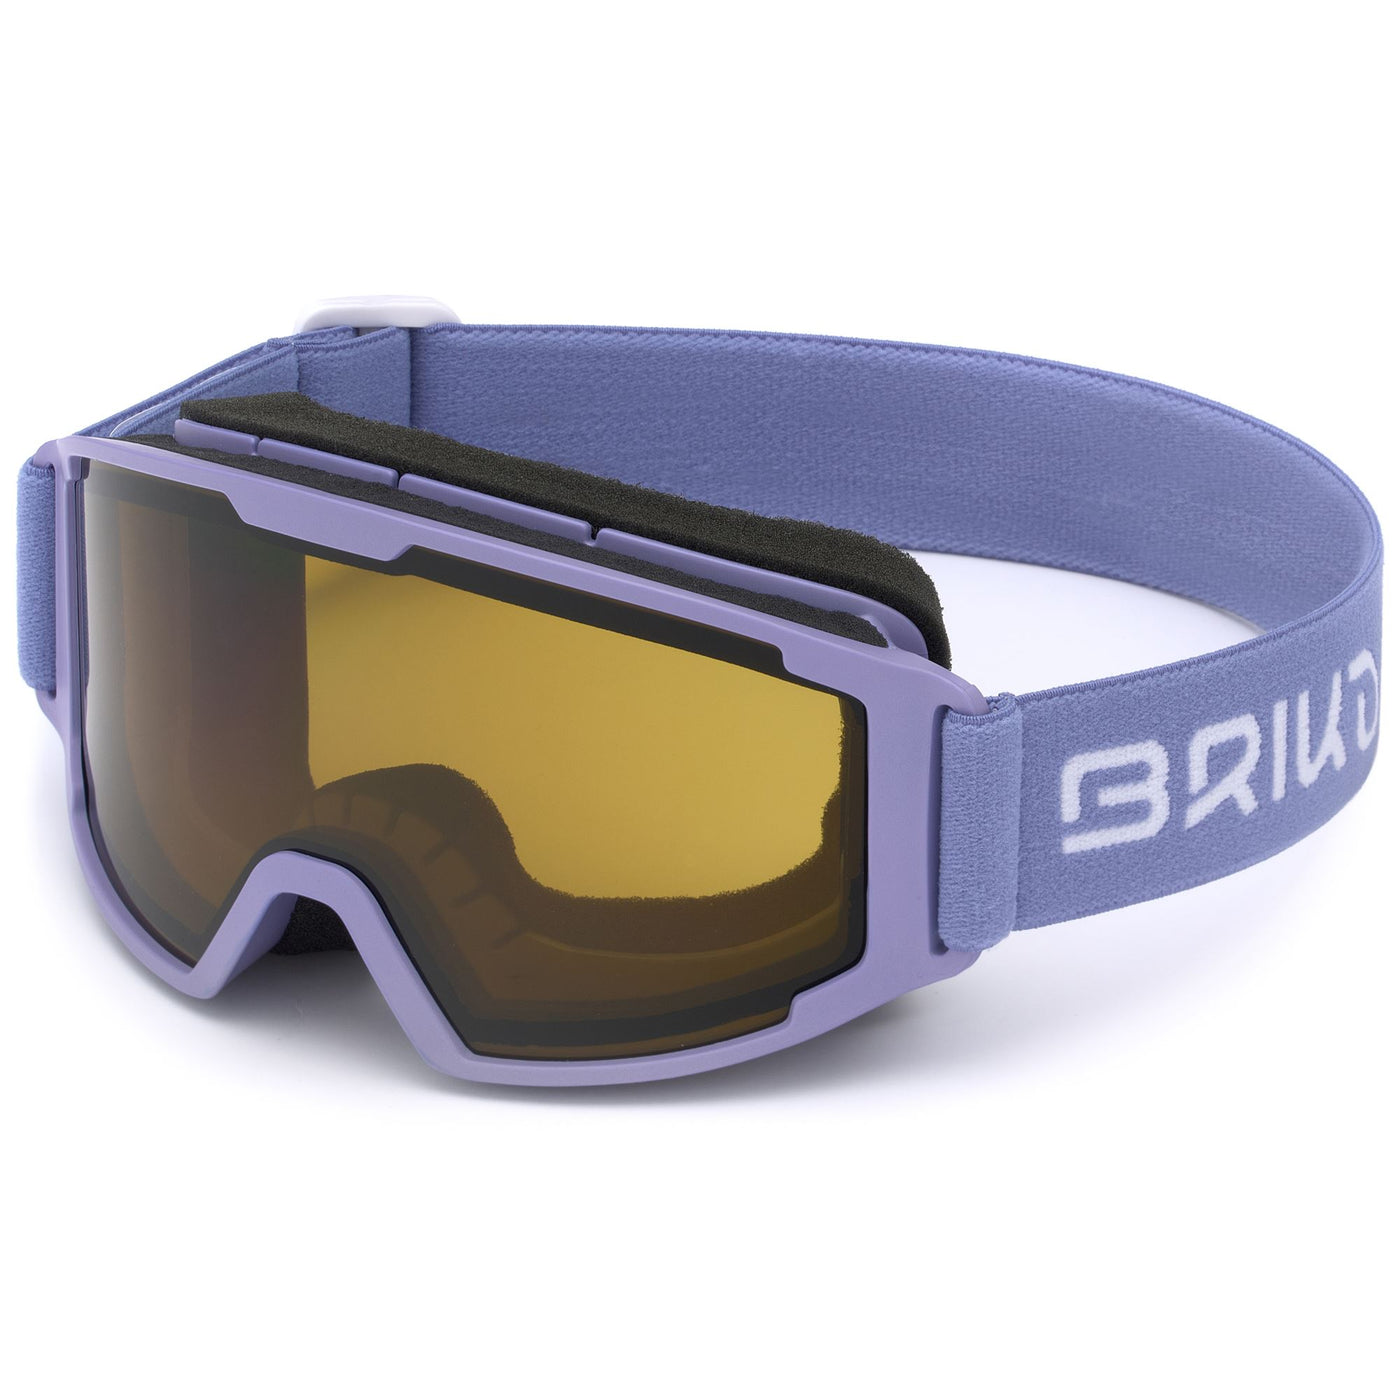 Goggles Kid unisex SAETTA Ski  Goggles LIGHT BLUE SHIP COVE - BR2 | briko Photo (jpg Rgb)			